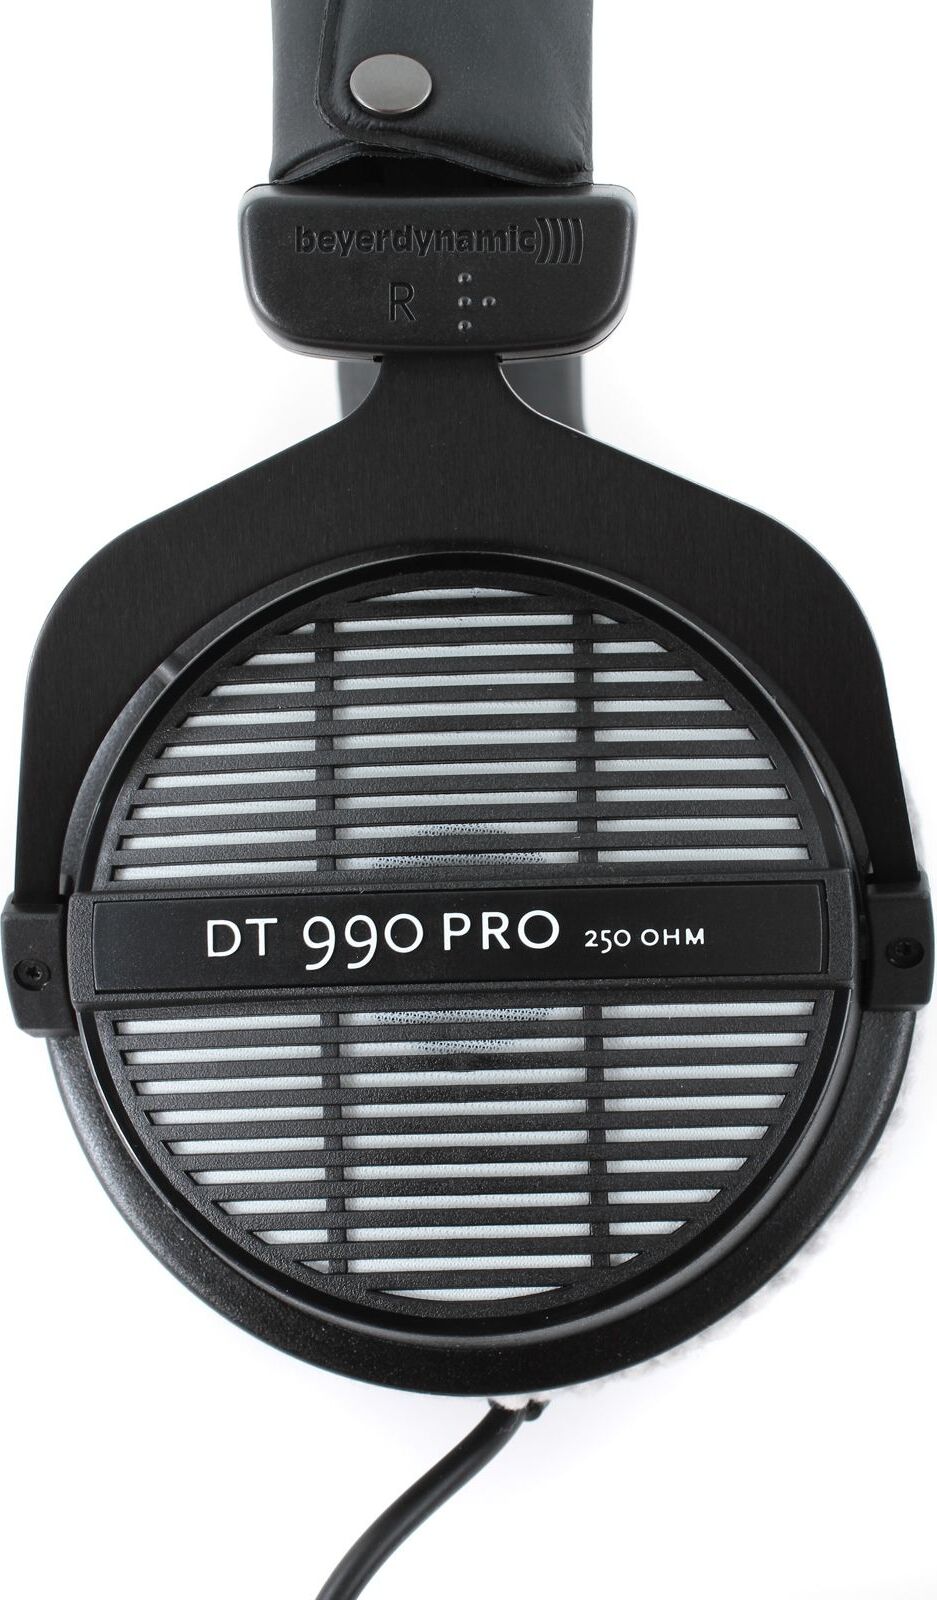 Beyerdynamic DT 990 Pro (Ouvert 250 Ohms)